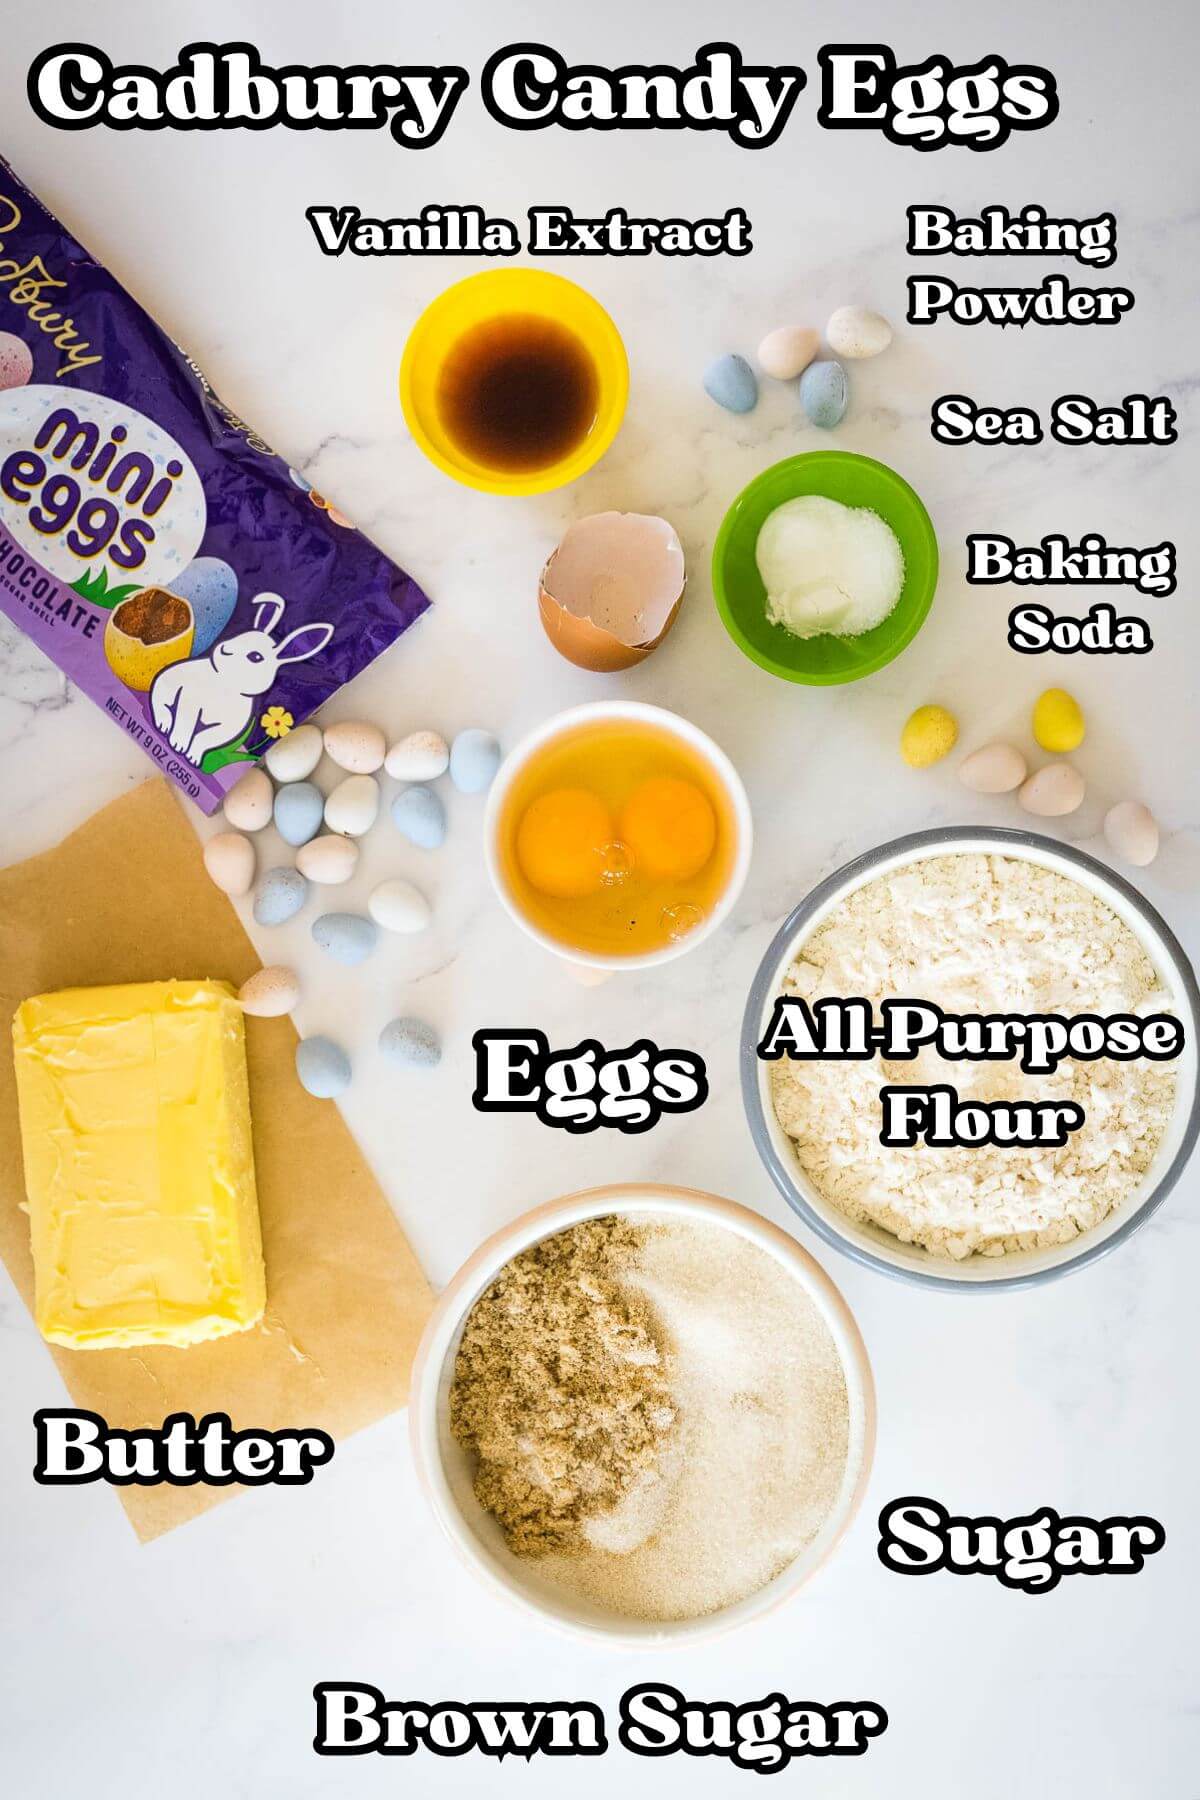 Giant Cadbury Cookie Cake labeled ingredients.